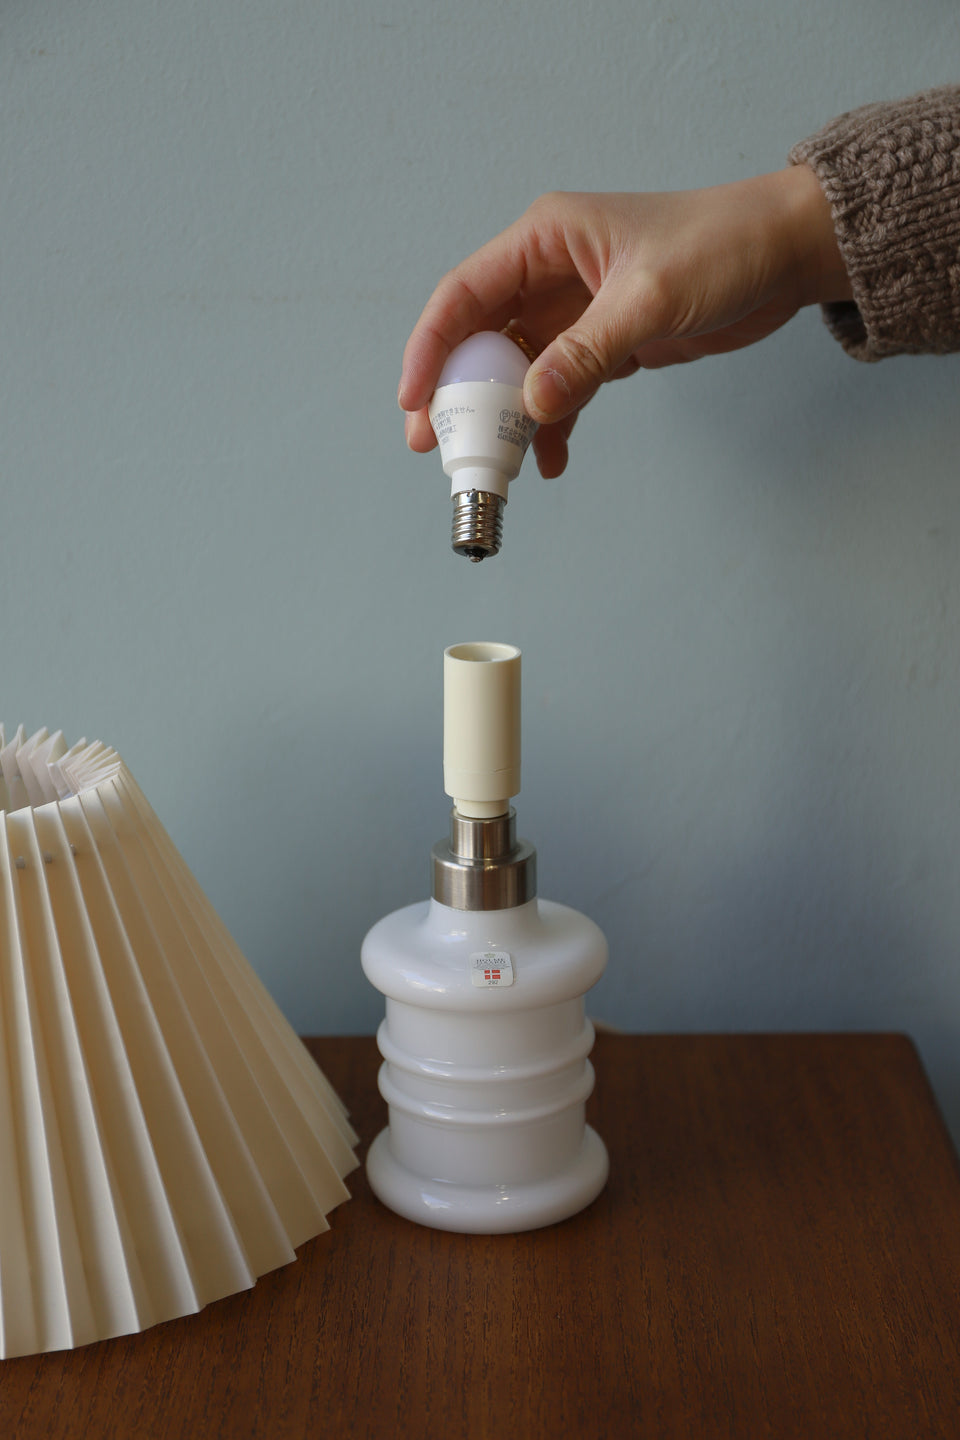 Vintage Holmegaard Table Lamp “Apoteker”/ホルムガード テーブルランプ シセ・ヴェアナー スモールサイズ デンマークヴィンテージ